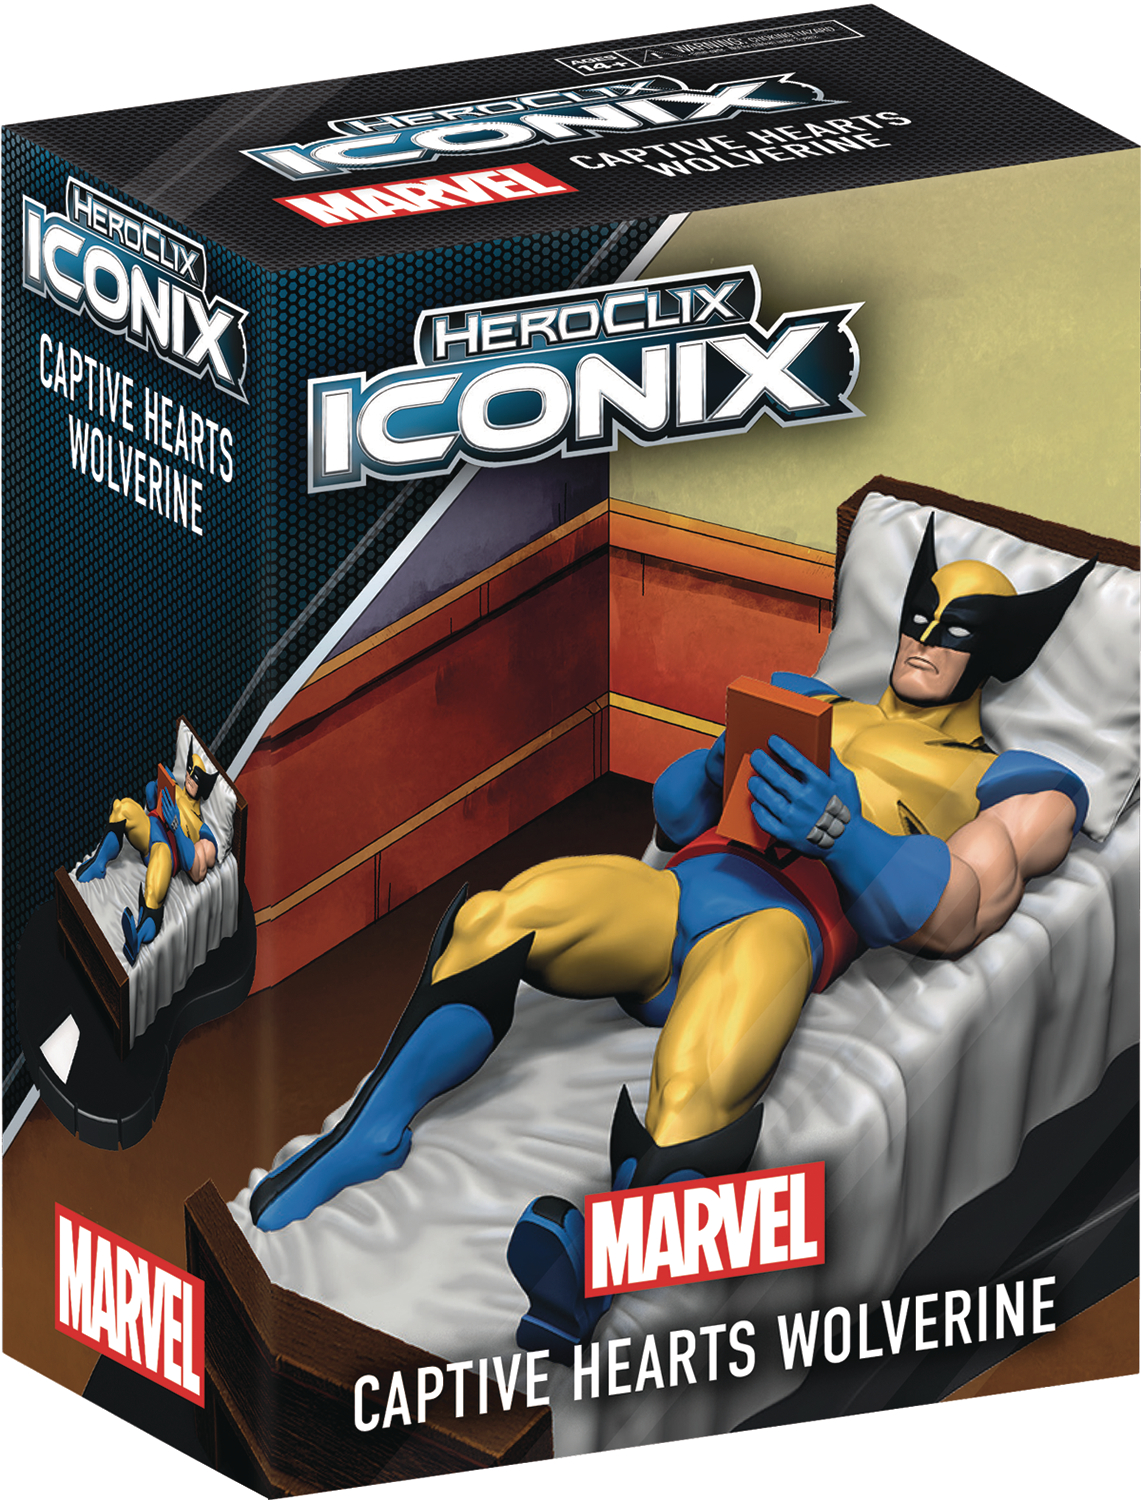 Marvel Heroclix Iconix Captive Hearts Wolverine